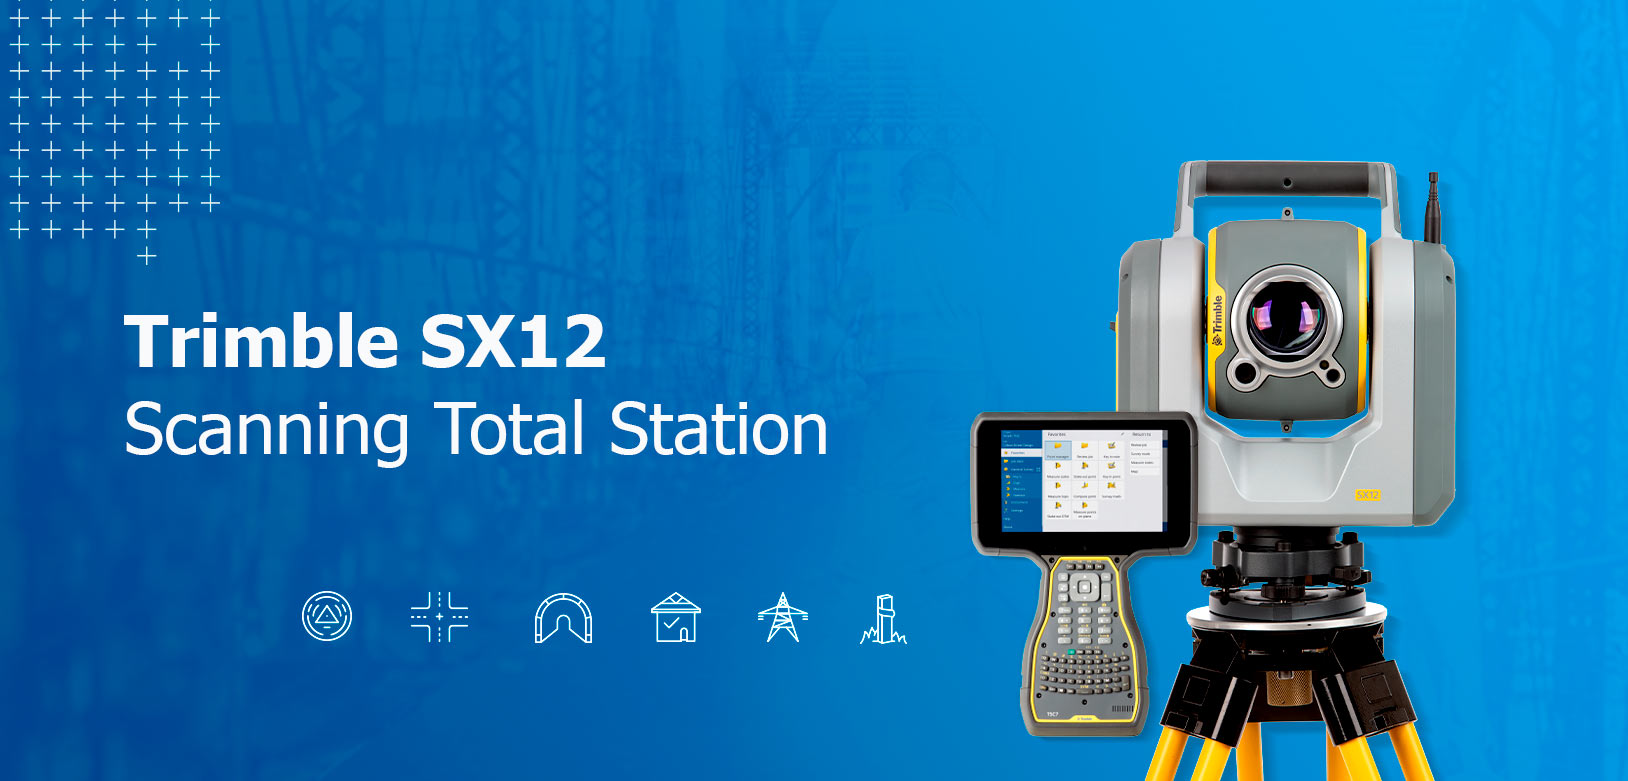 Trimble SX12 Scanning Total Station